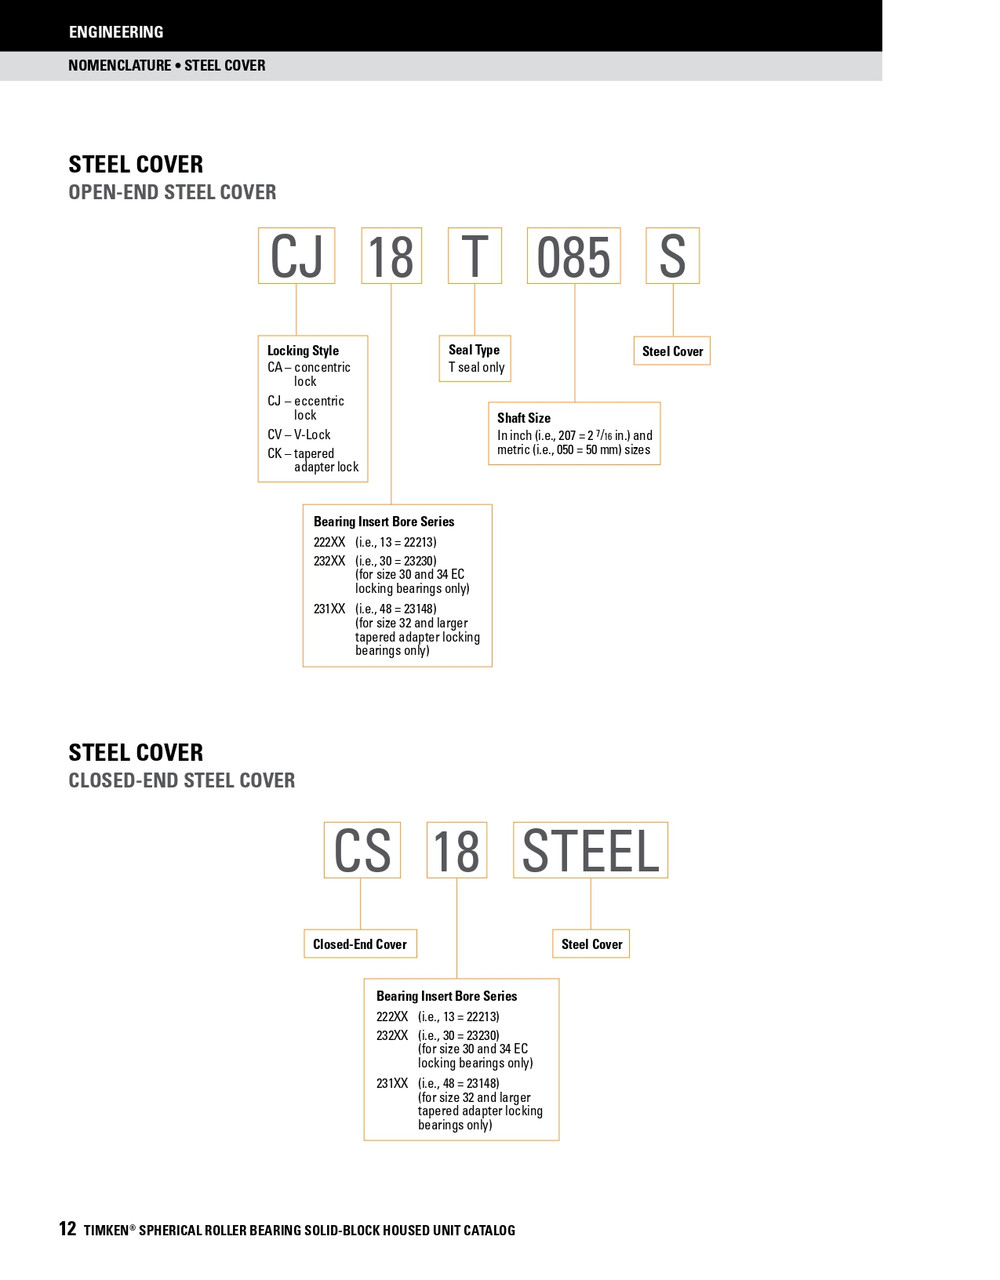 3" Timken SRB Steel Open End Cover w/Teflon Seal - QA Concentric Lock Type  CA15T300S